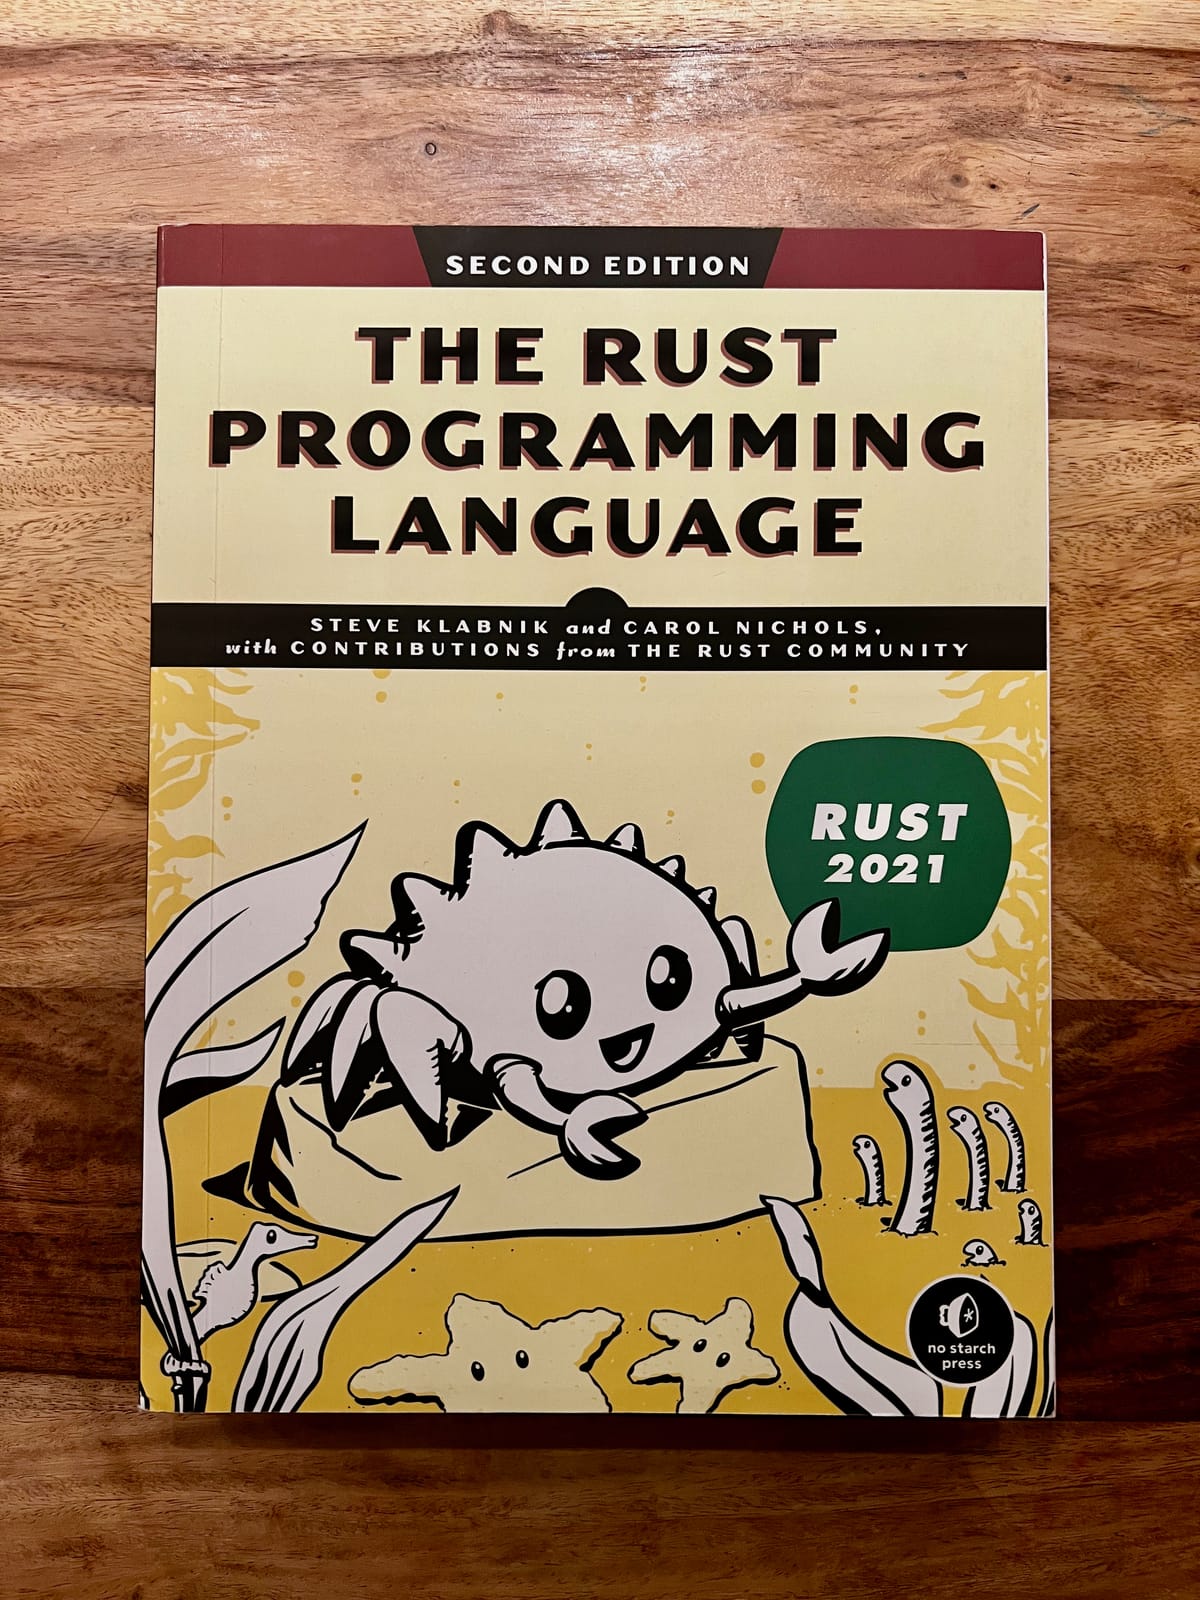 "The Rust Programming Language" by Steve Klabnik and Carol Nichols